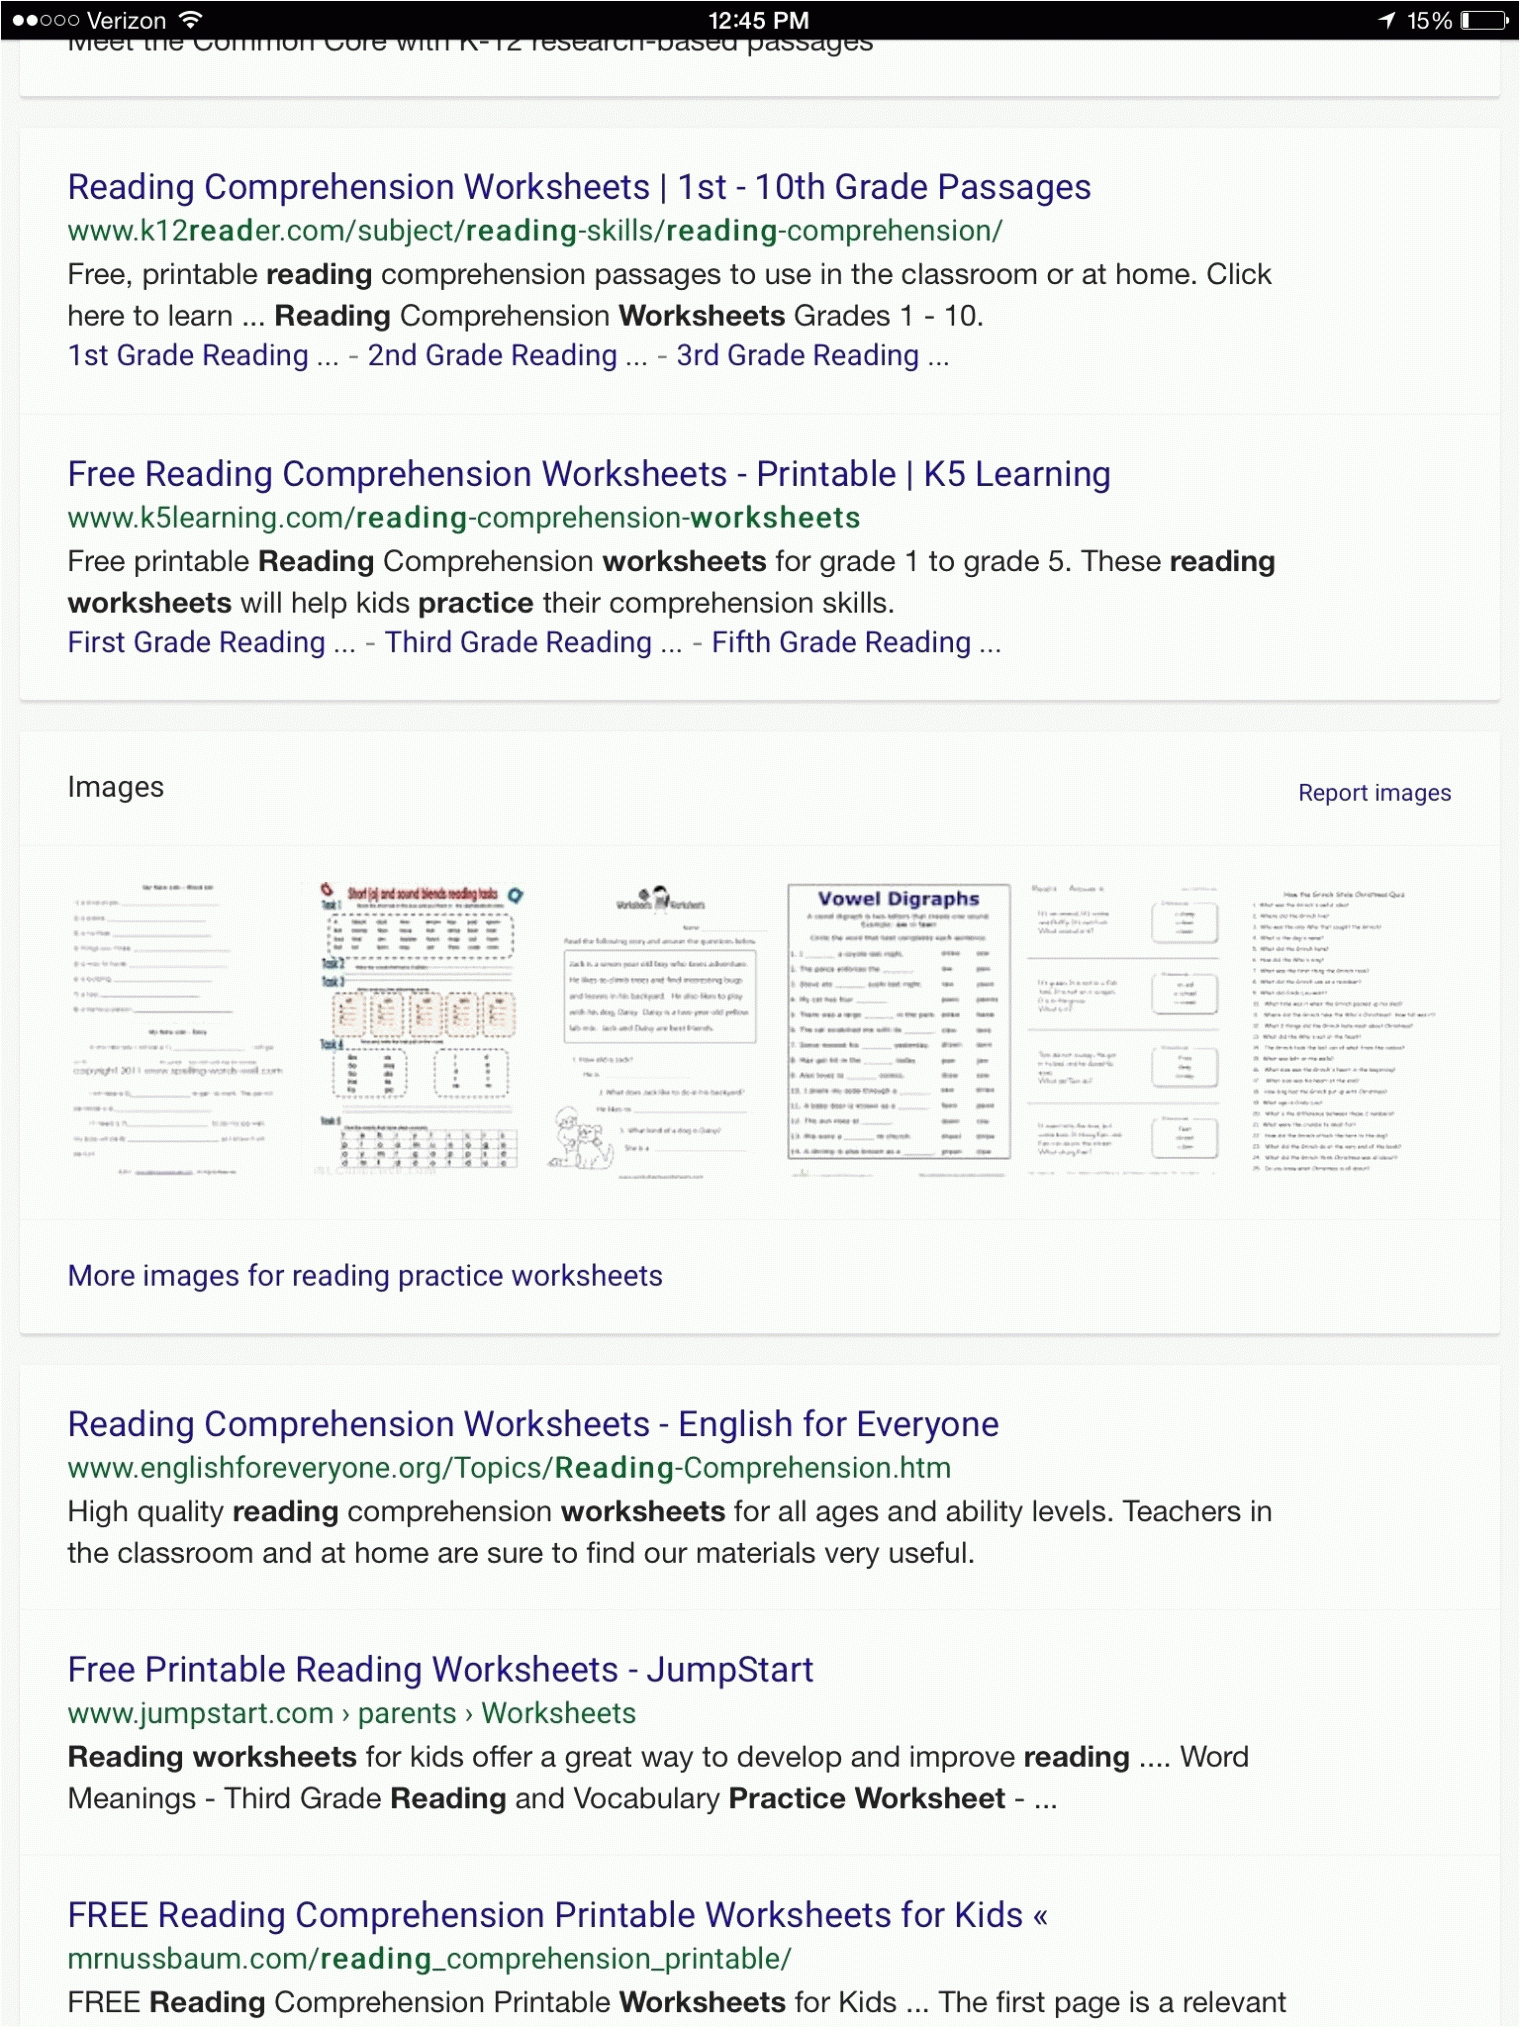 Free Printable Reading Comprehension Worksheets 3Rd Grade To Free - Free Printable Reading Comprehension Worksheets Grade 5